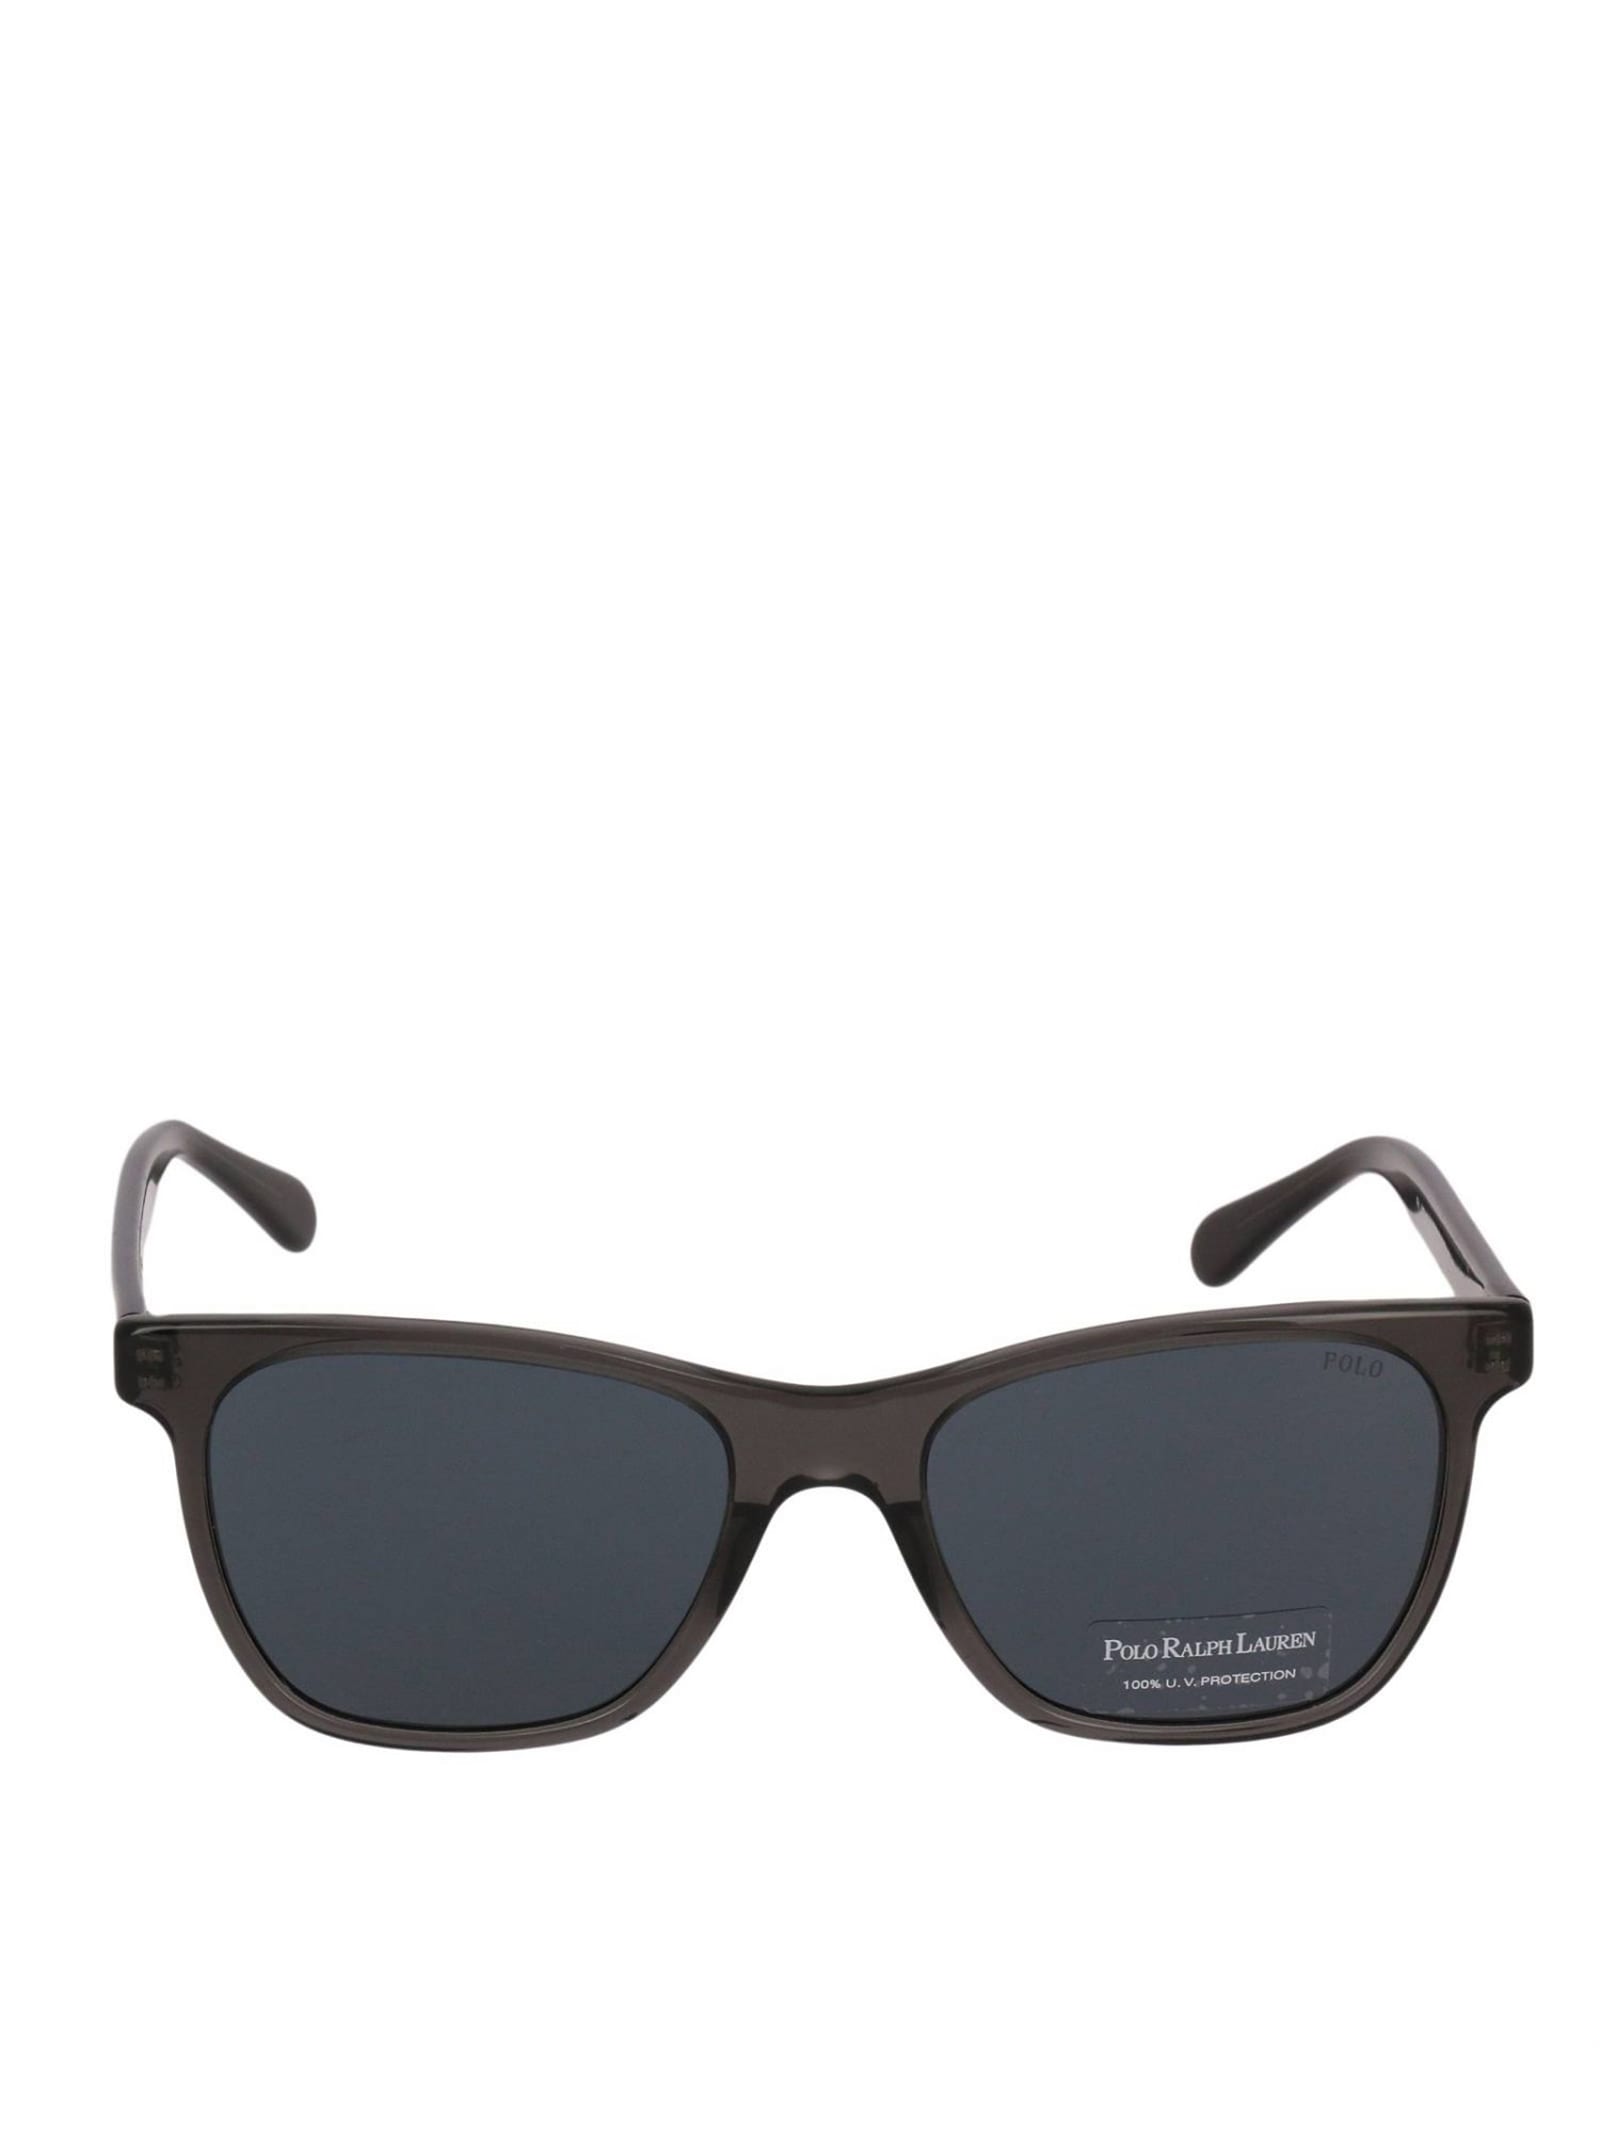 Polo Ralph Lauren Ph4128 5536/87 Sunglasses